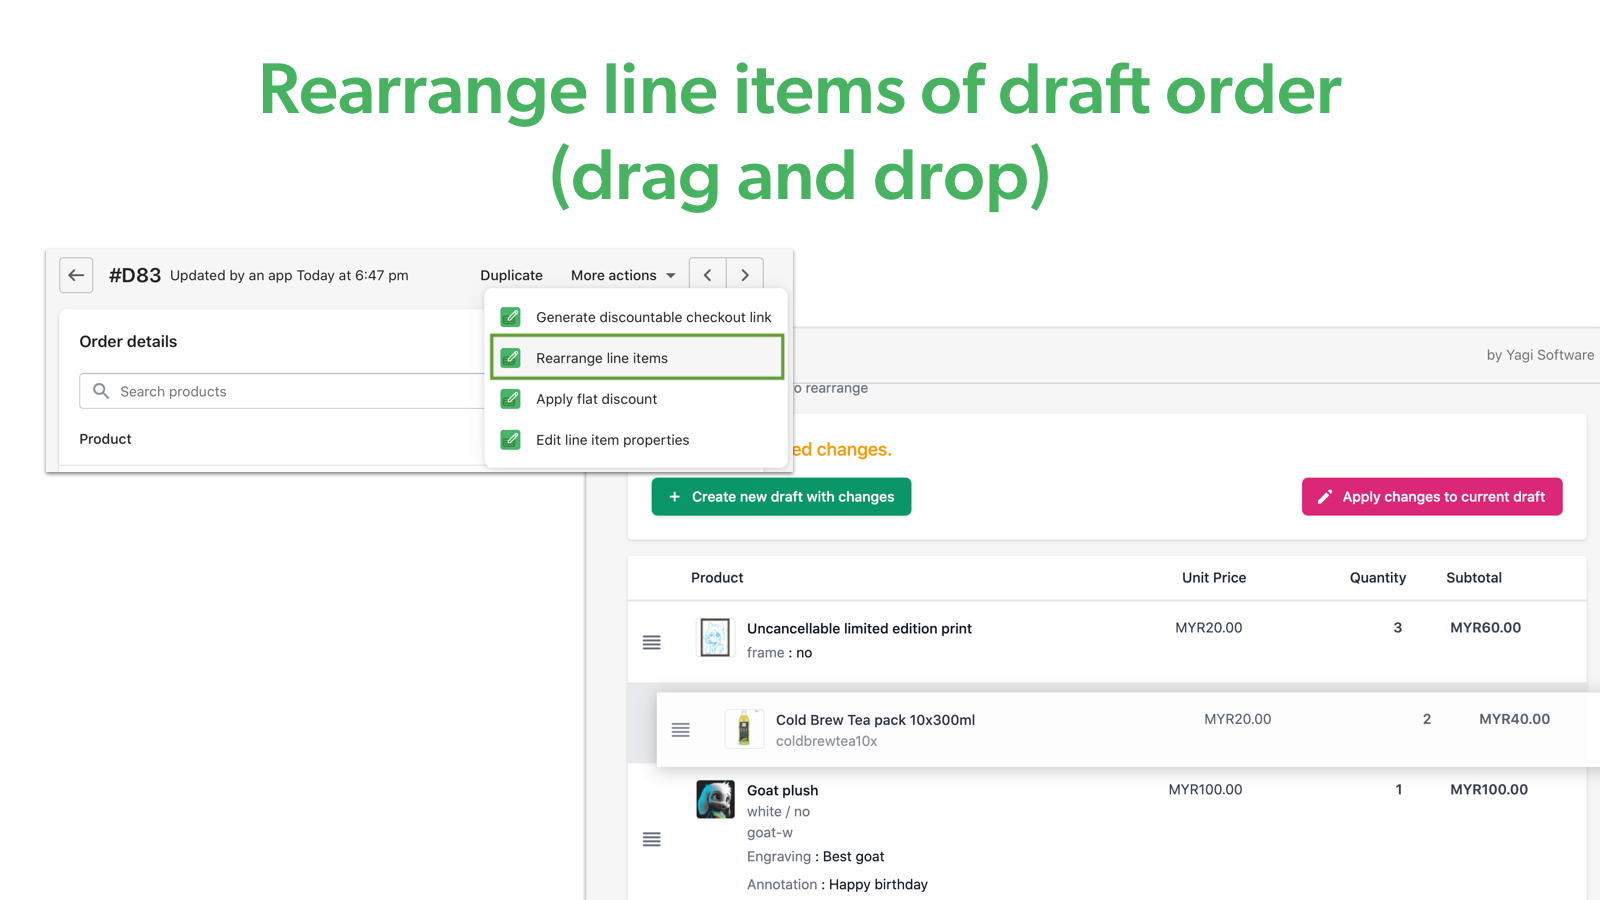 Rearrange line items of draft order